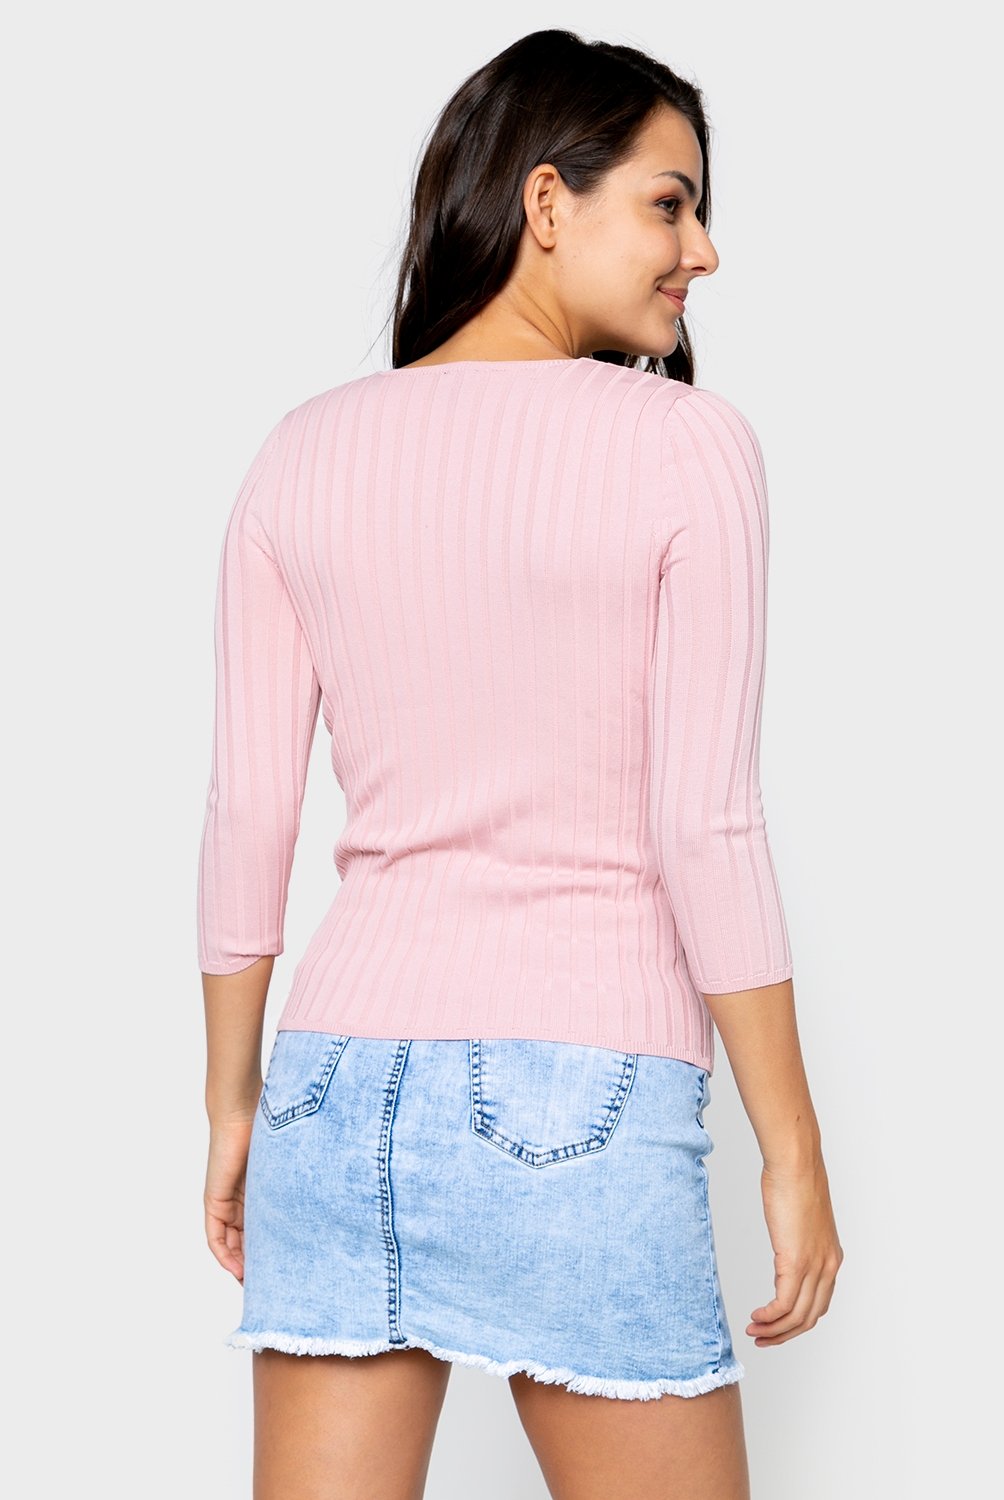 Mossimo - Sweater